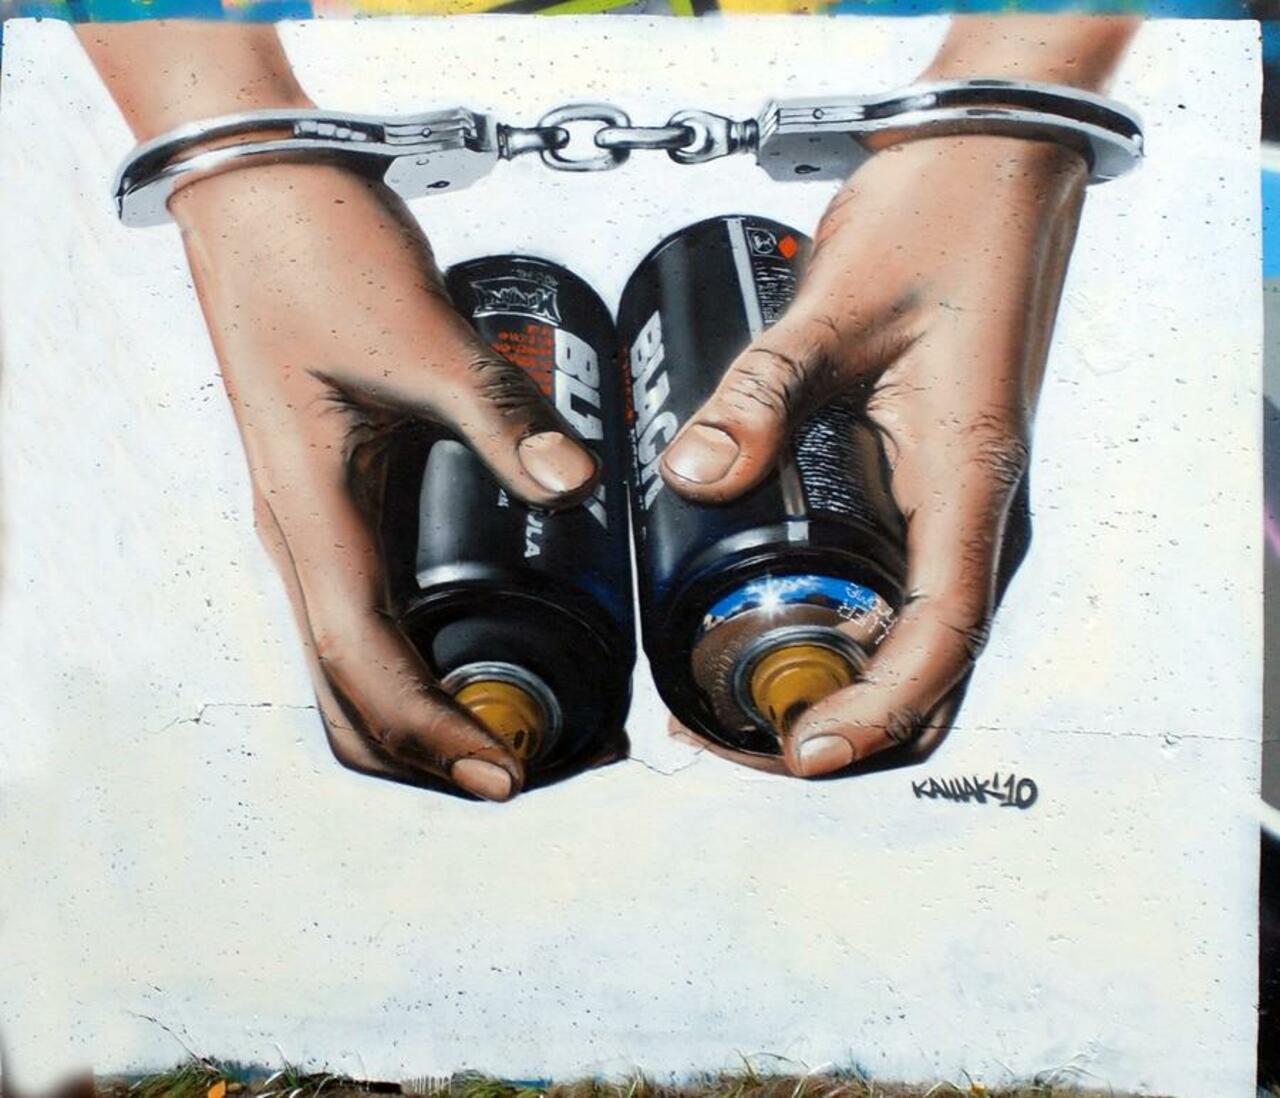 RT @RuzzoMDFK: Un mensaje simple.
Artista: Kashak
Russia 
#art #streetart #mural #graffiti http://t.co/PsT8ORoOvK